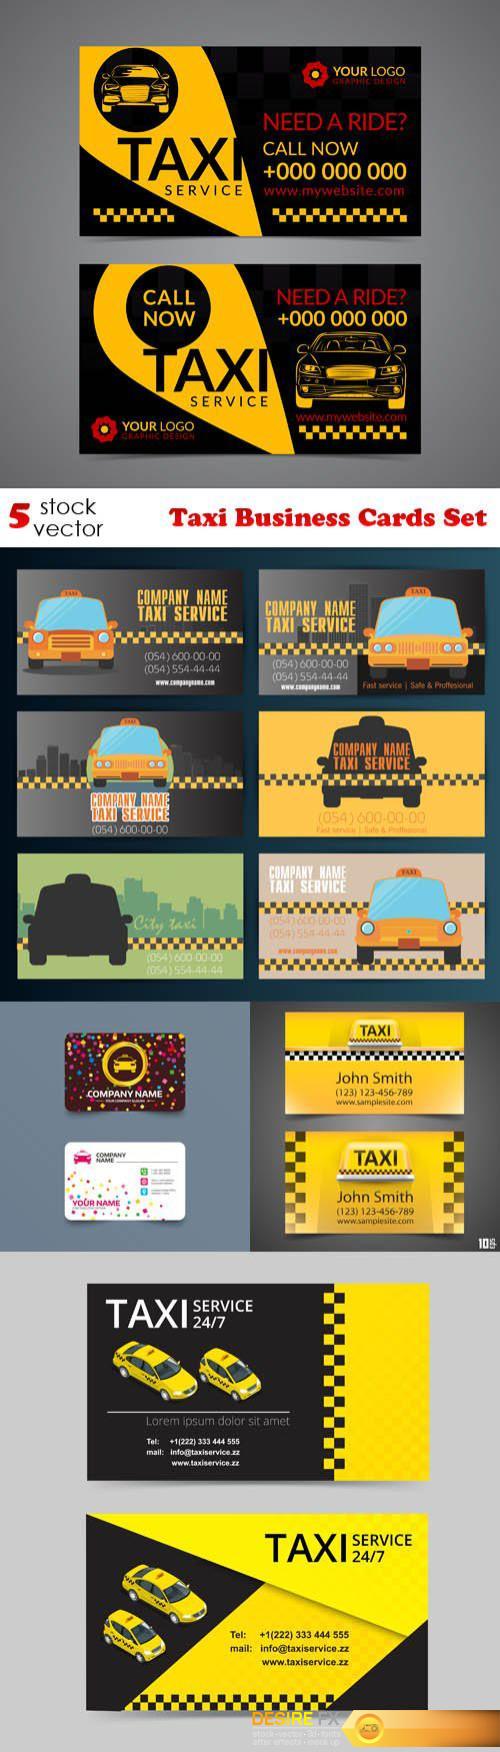 Vectors - Taxi Business Cards Set